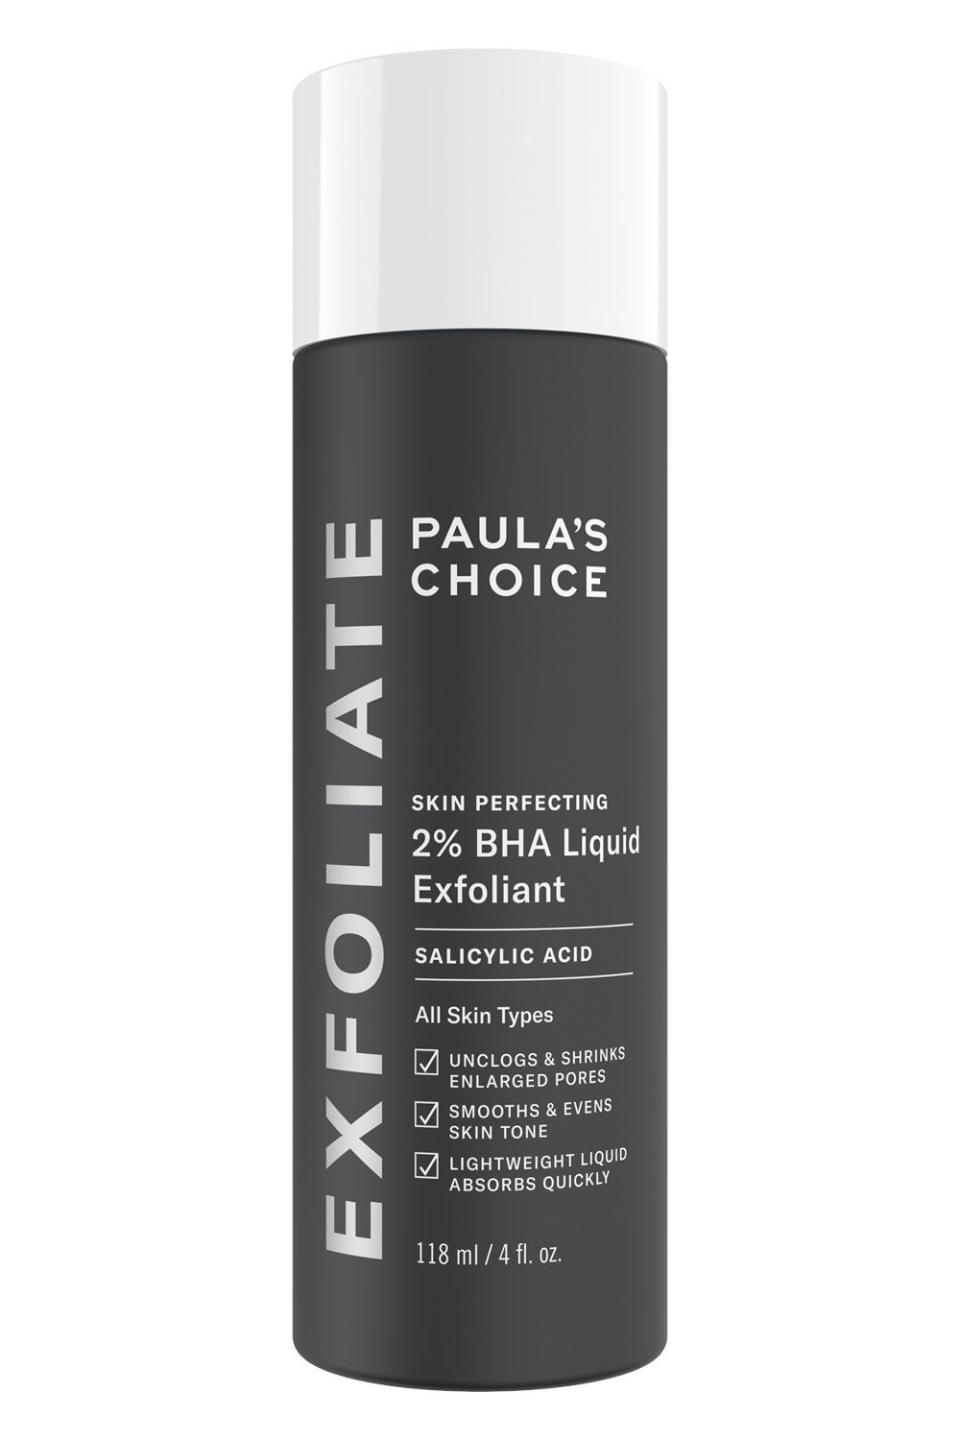 5) Paula's Choice Skin Perfecting 2% BHA Liquid Exfoliant